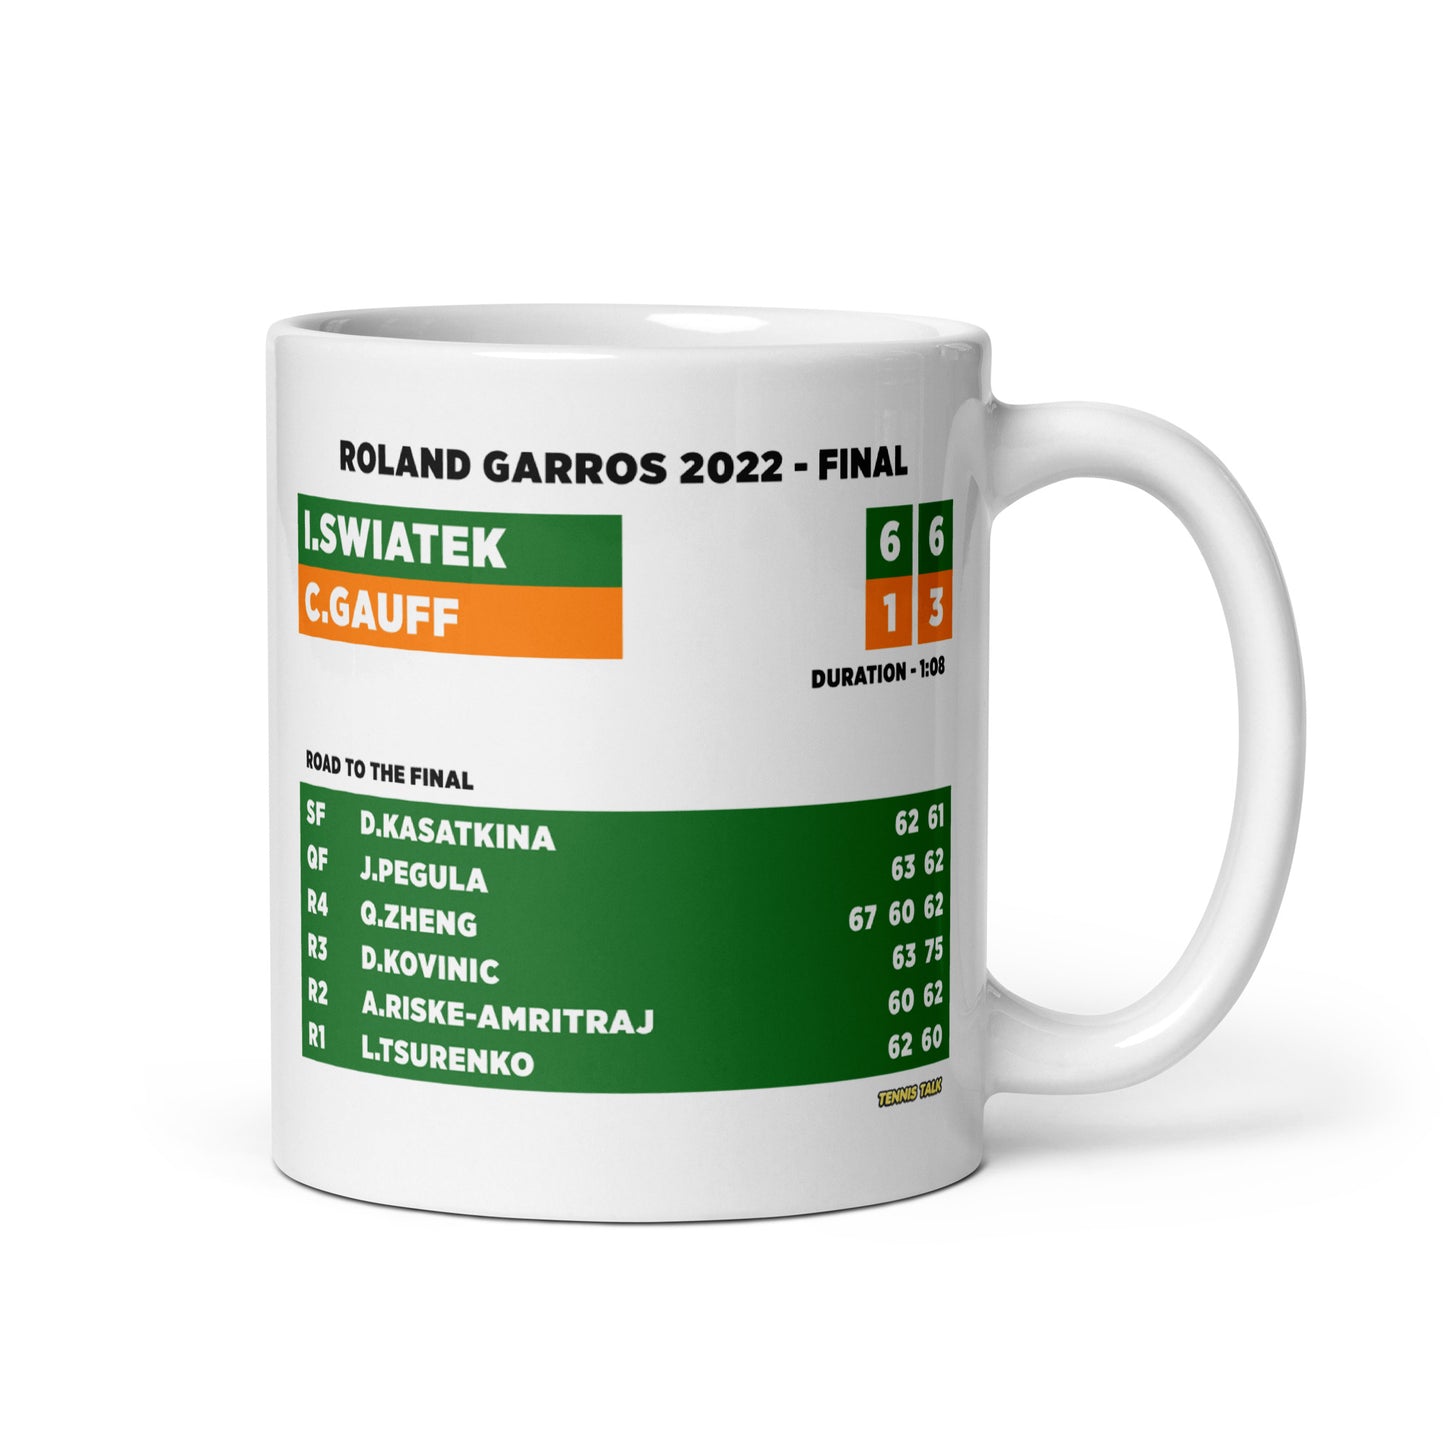 Iga Swiatek vs Coco Gauff - Roland Garros 2022 Final Mug